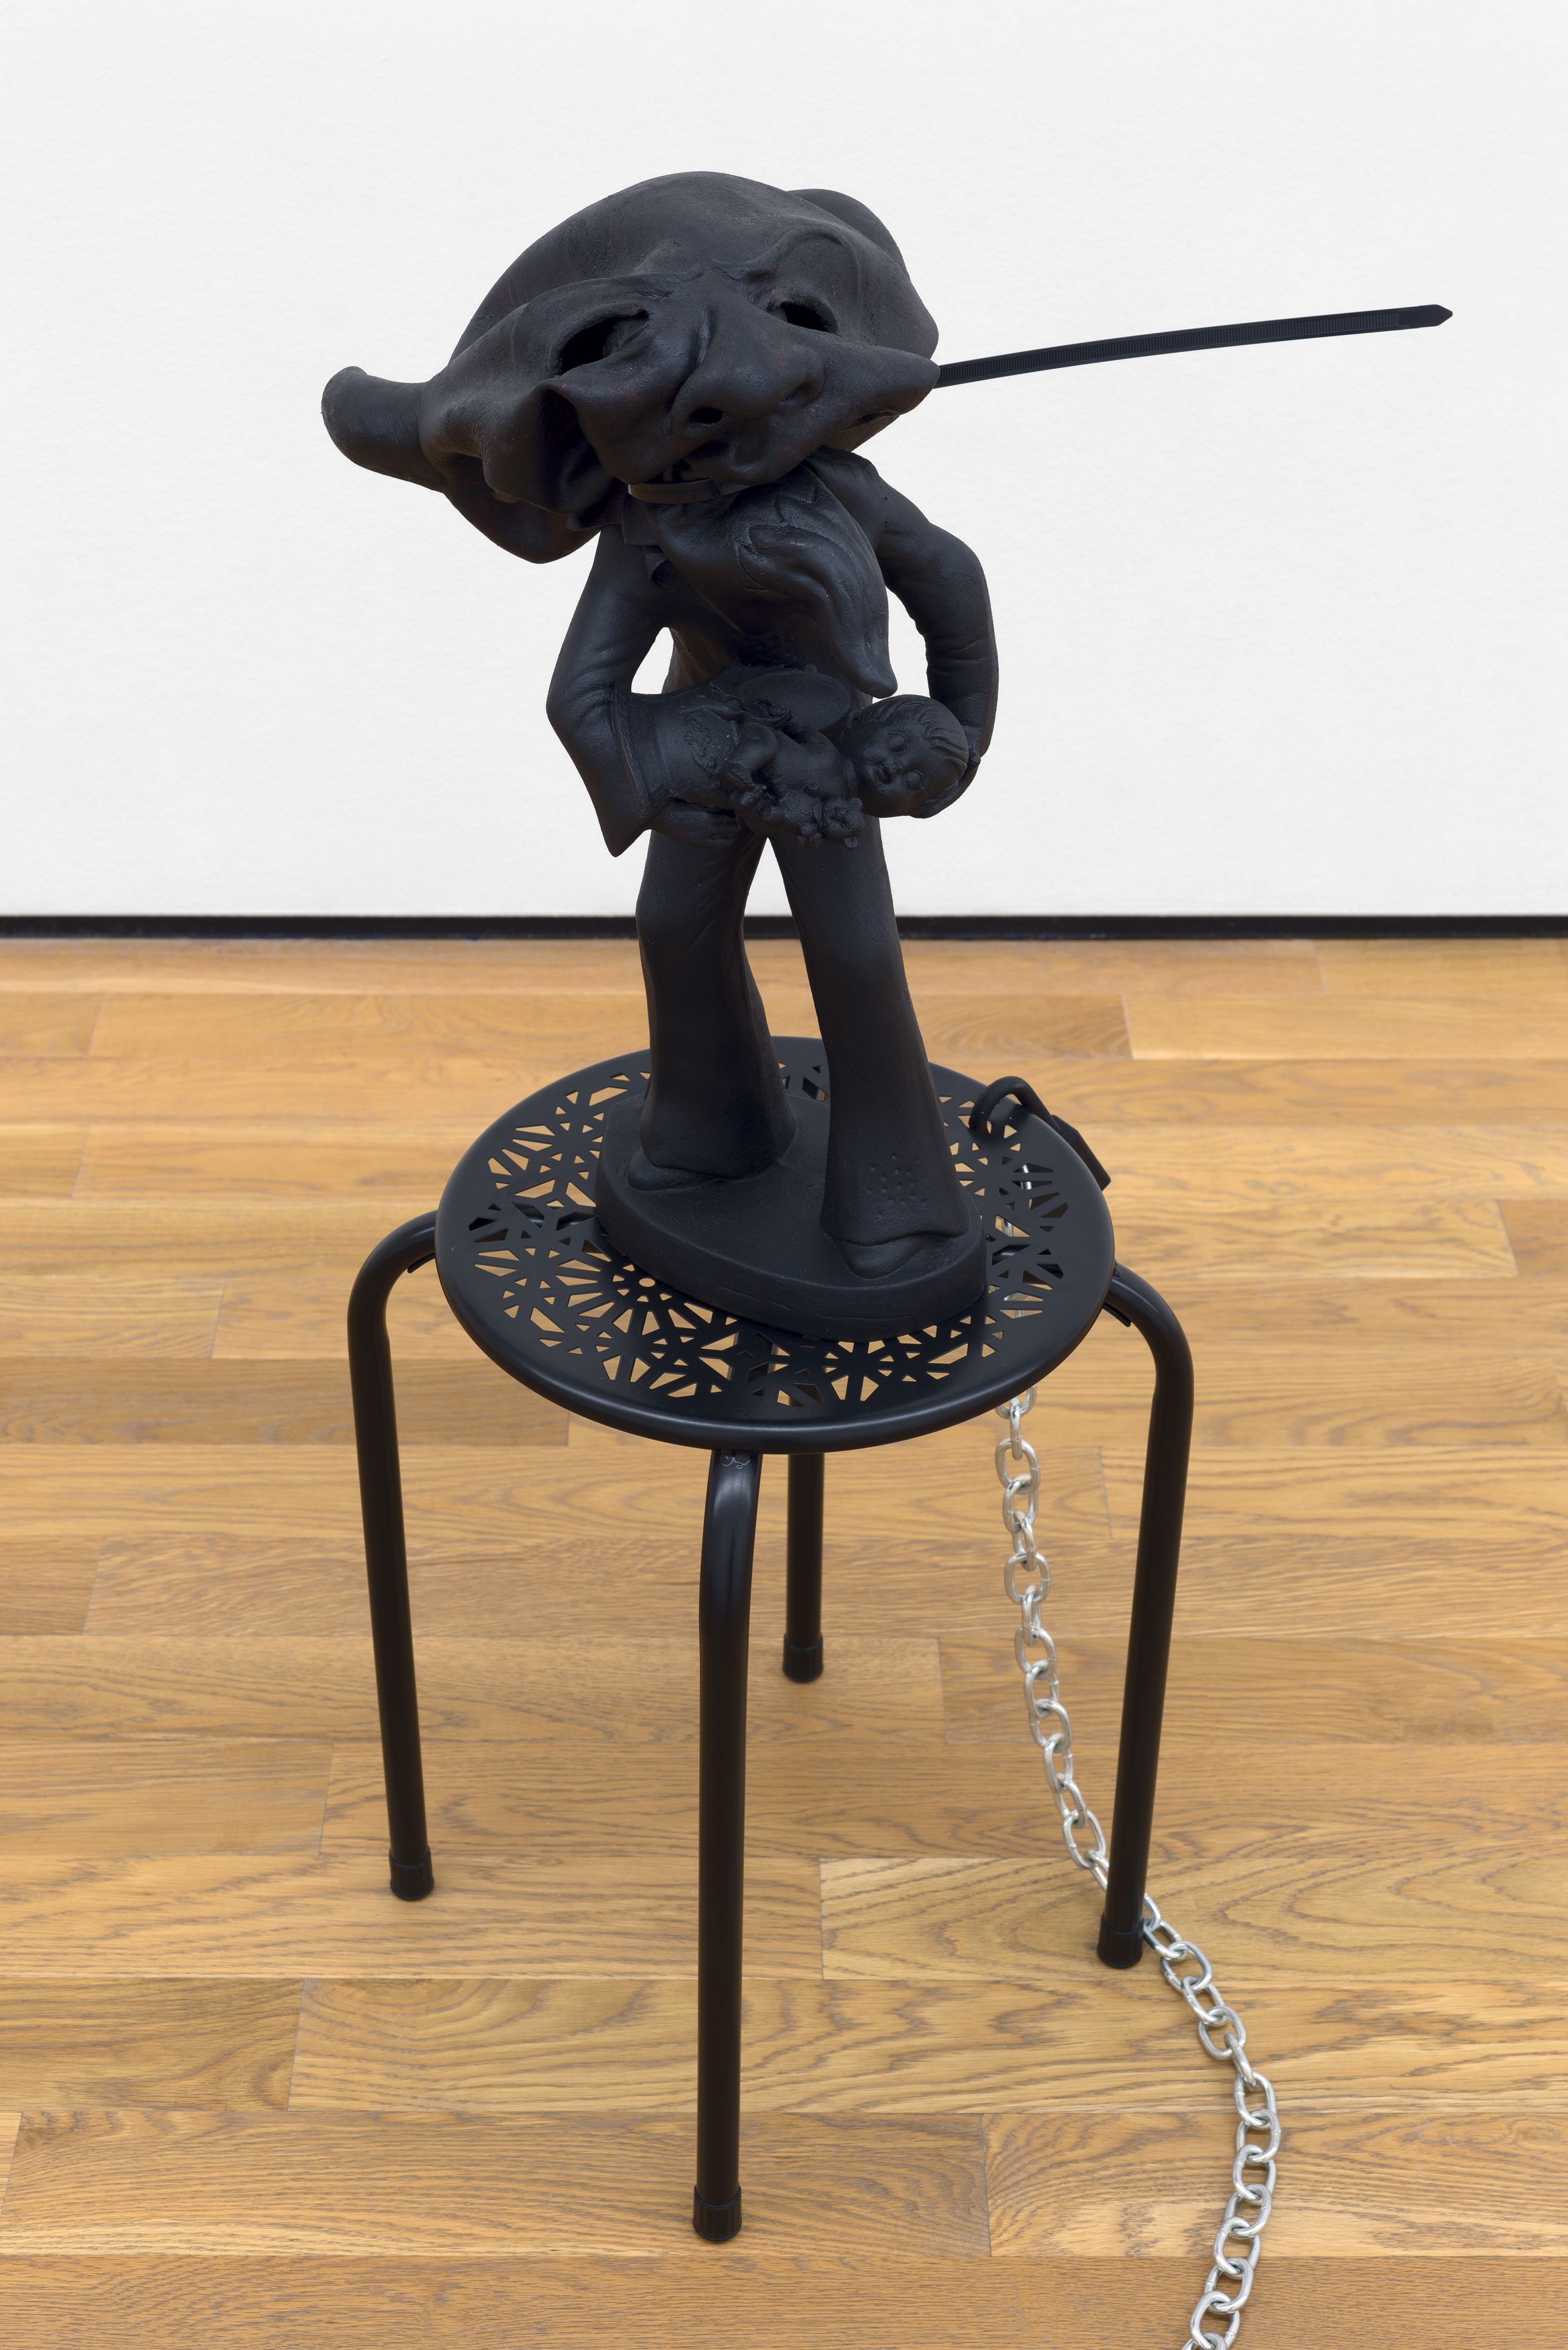 Brian Kokoska, Lonesome Cowboy (Dead Elvis), 2016, ceramic, rubber mask, acrylic, plastic, metal table, lock, double bit axe, cable tie, dimensions variable